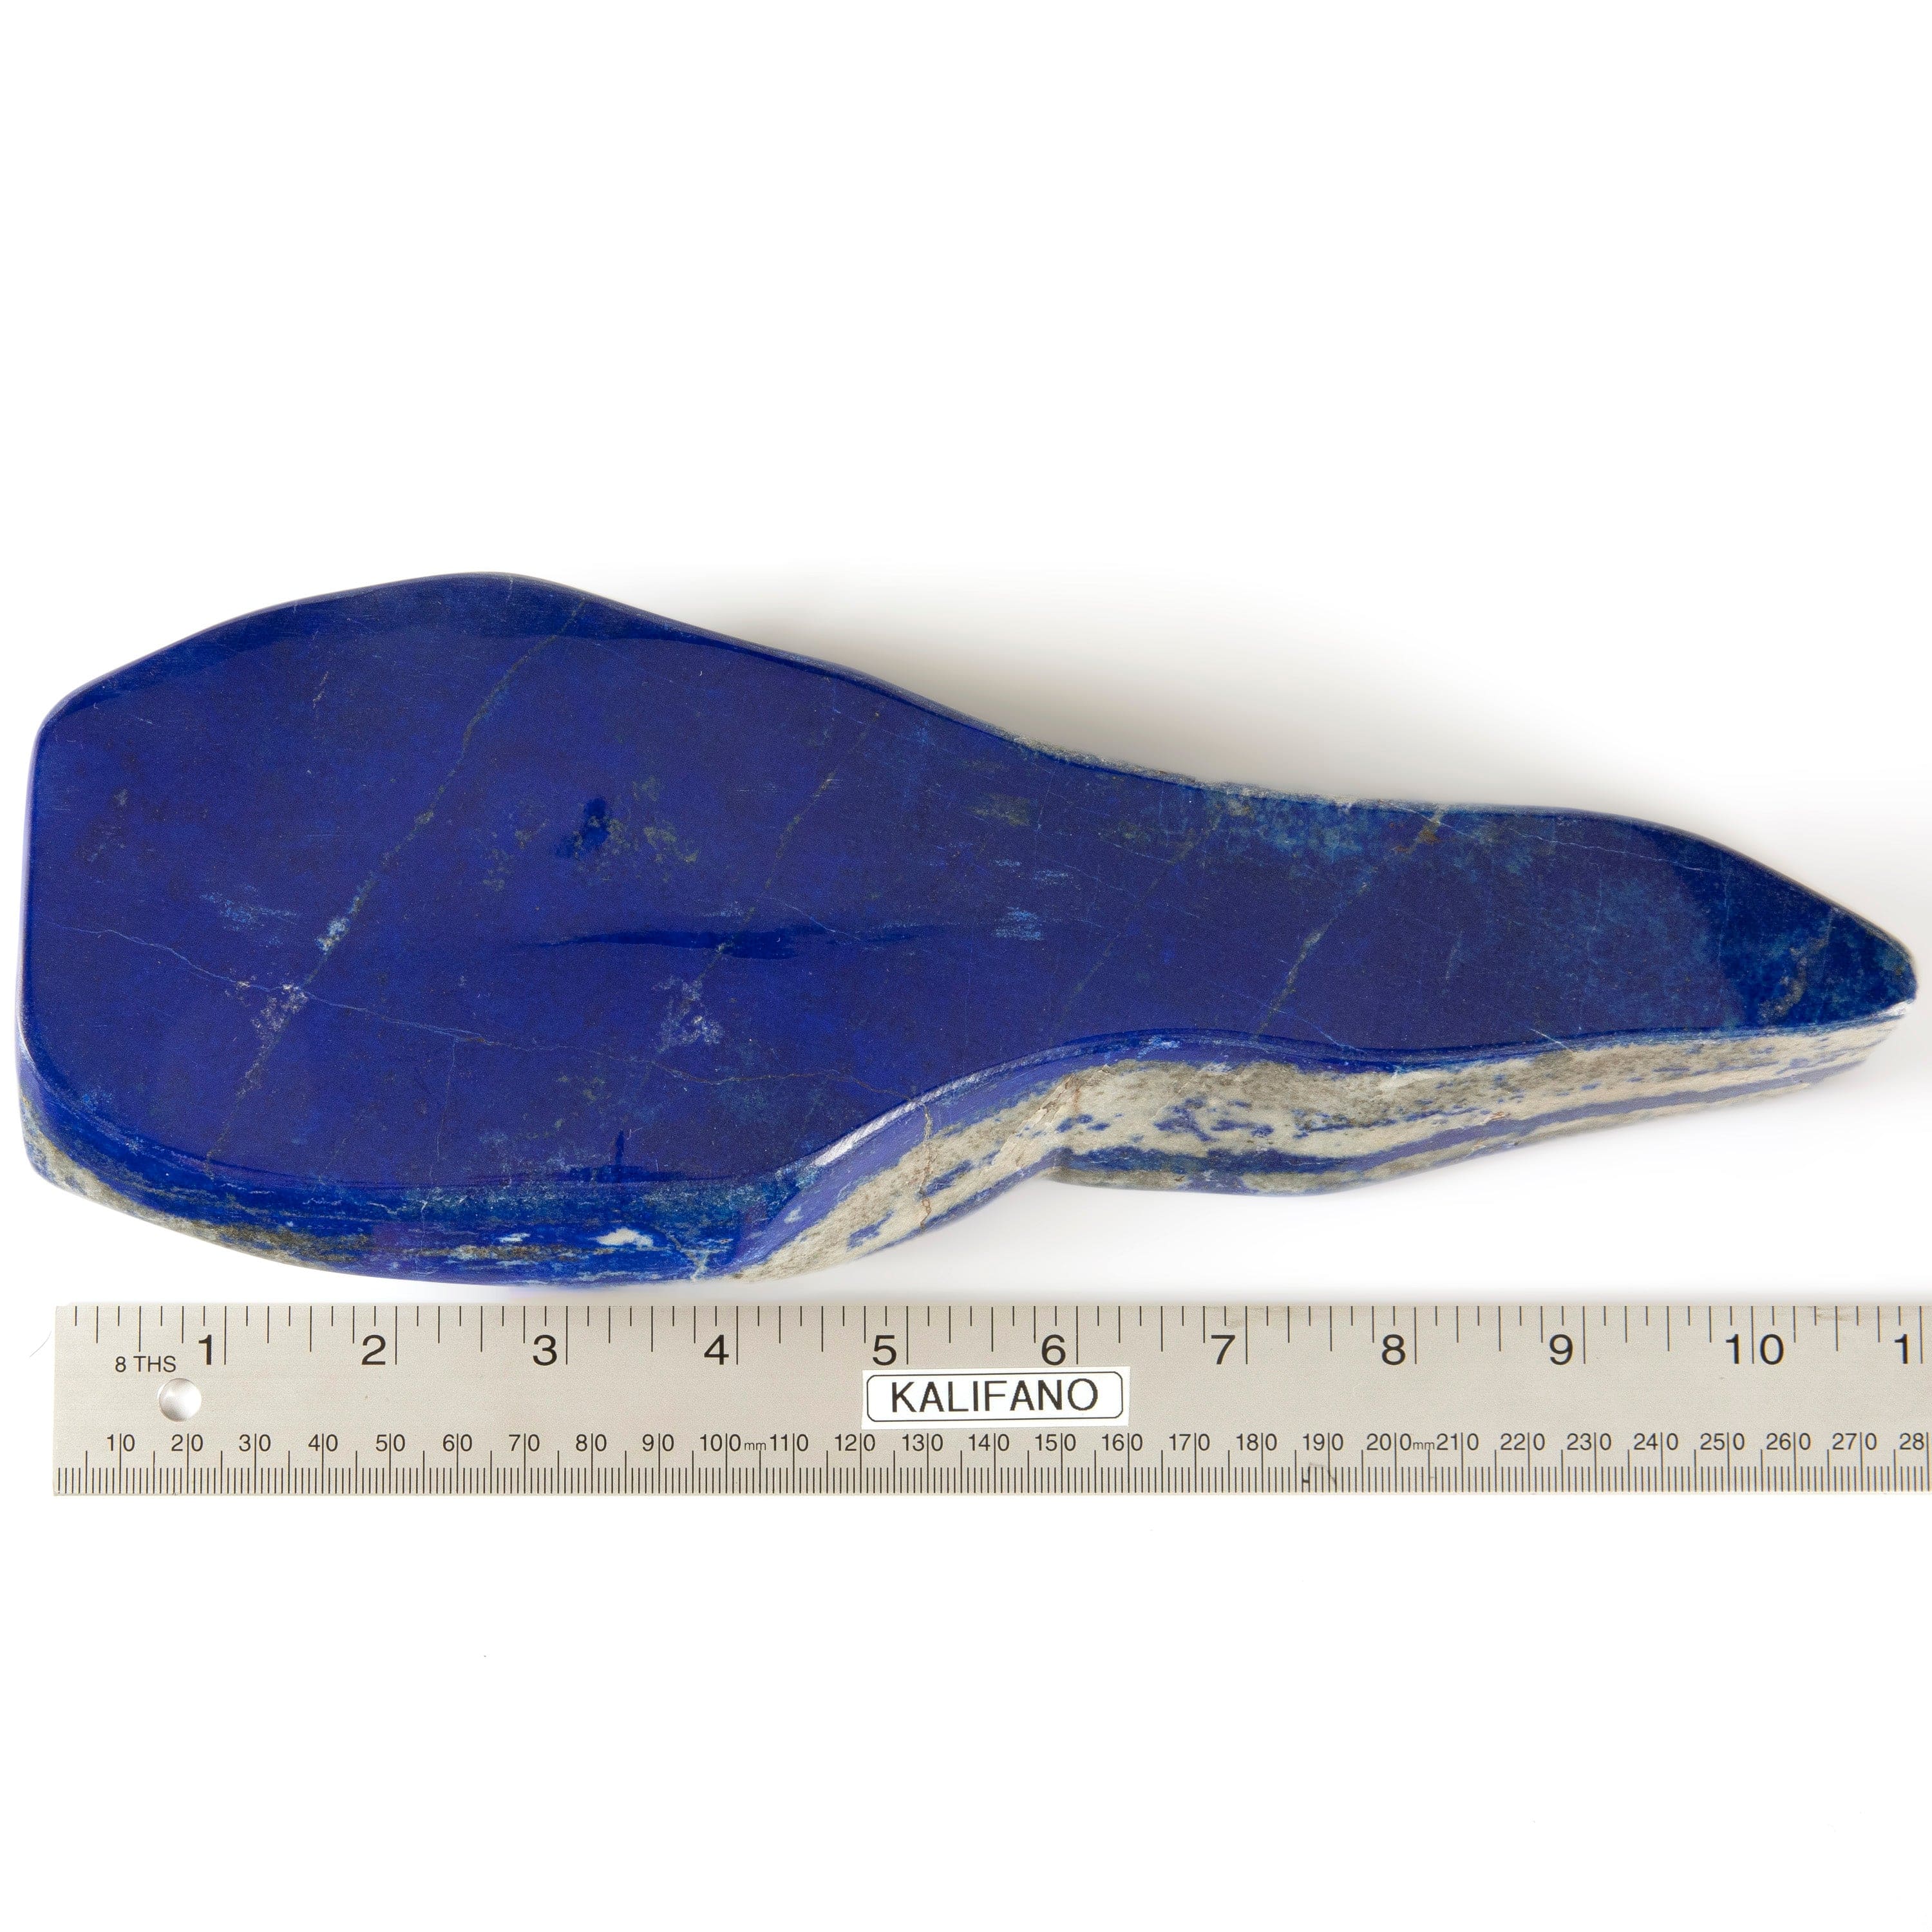 Kalifano Lapis Lapis Lazuli Freeform from Afghanistan - 11" / 1,910 grams LP1900.002